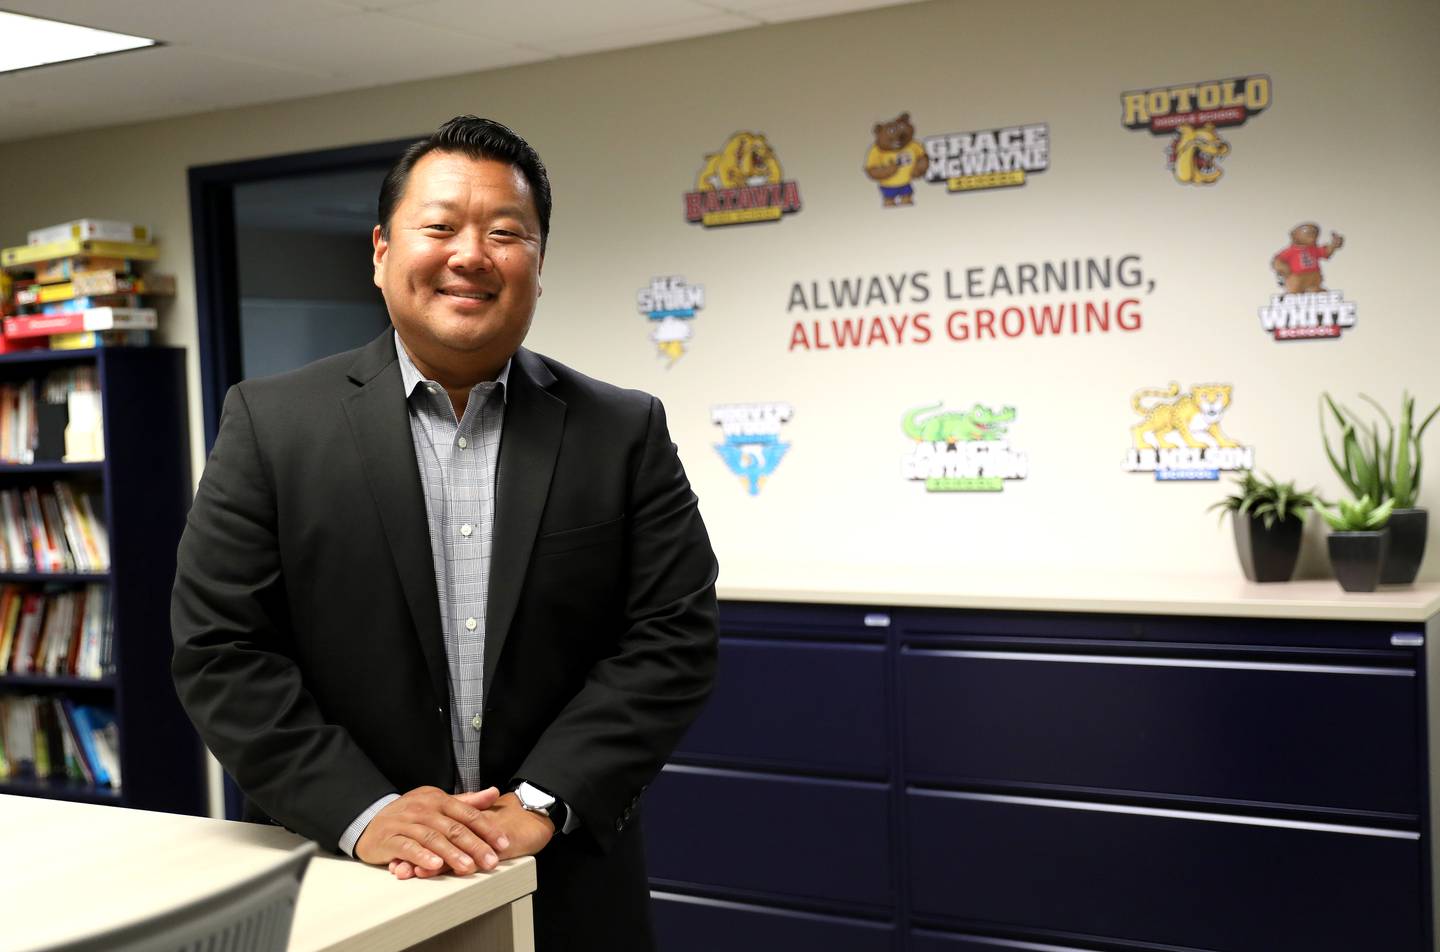 Tom Kim began his tenure as superintendent of Batavia Public School District 101 last month.